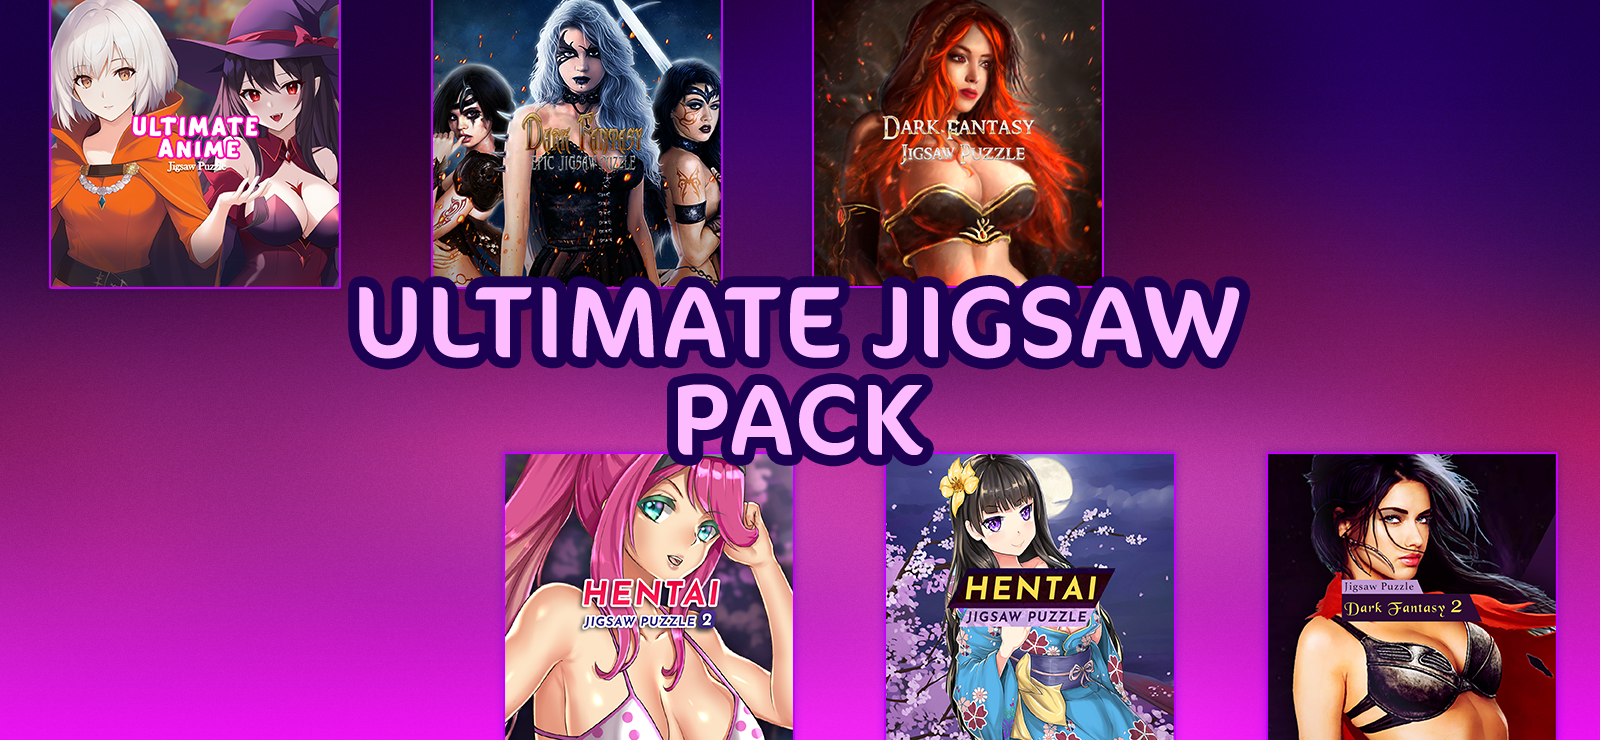 Ultimate Jigsaw Pack